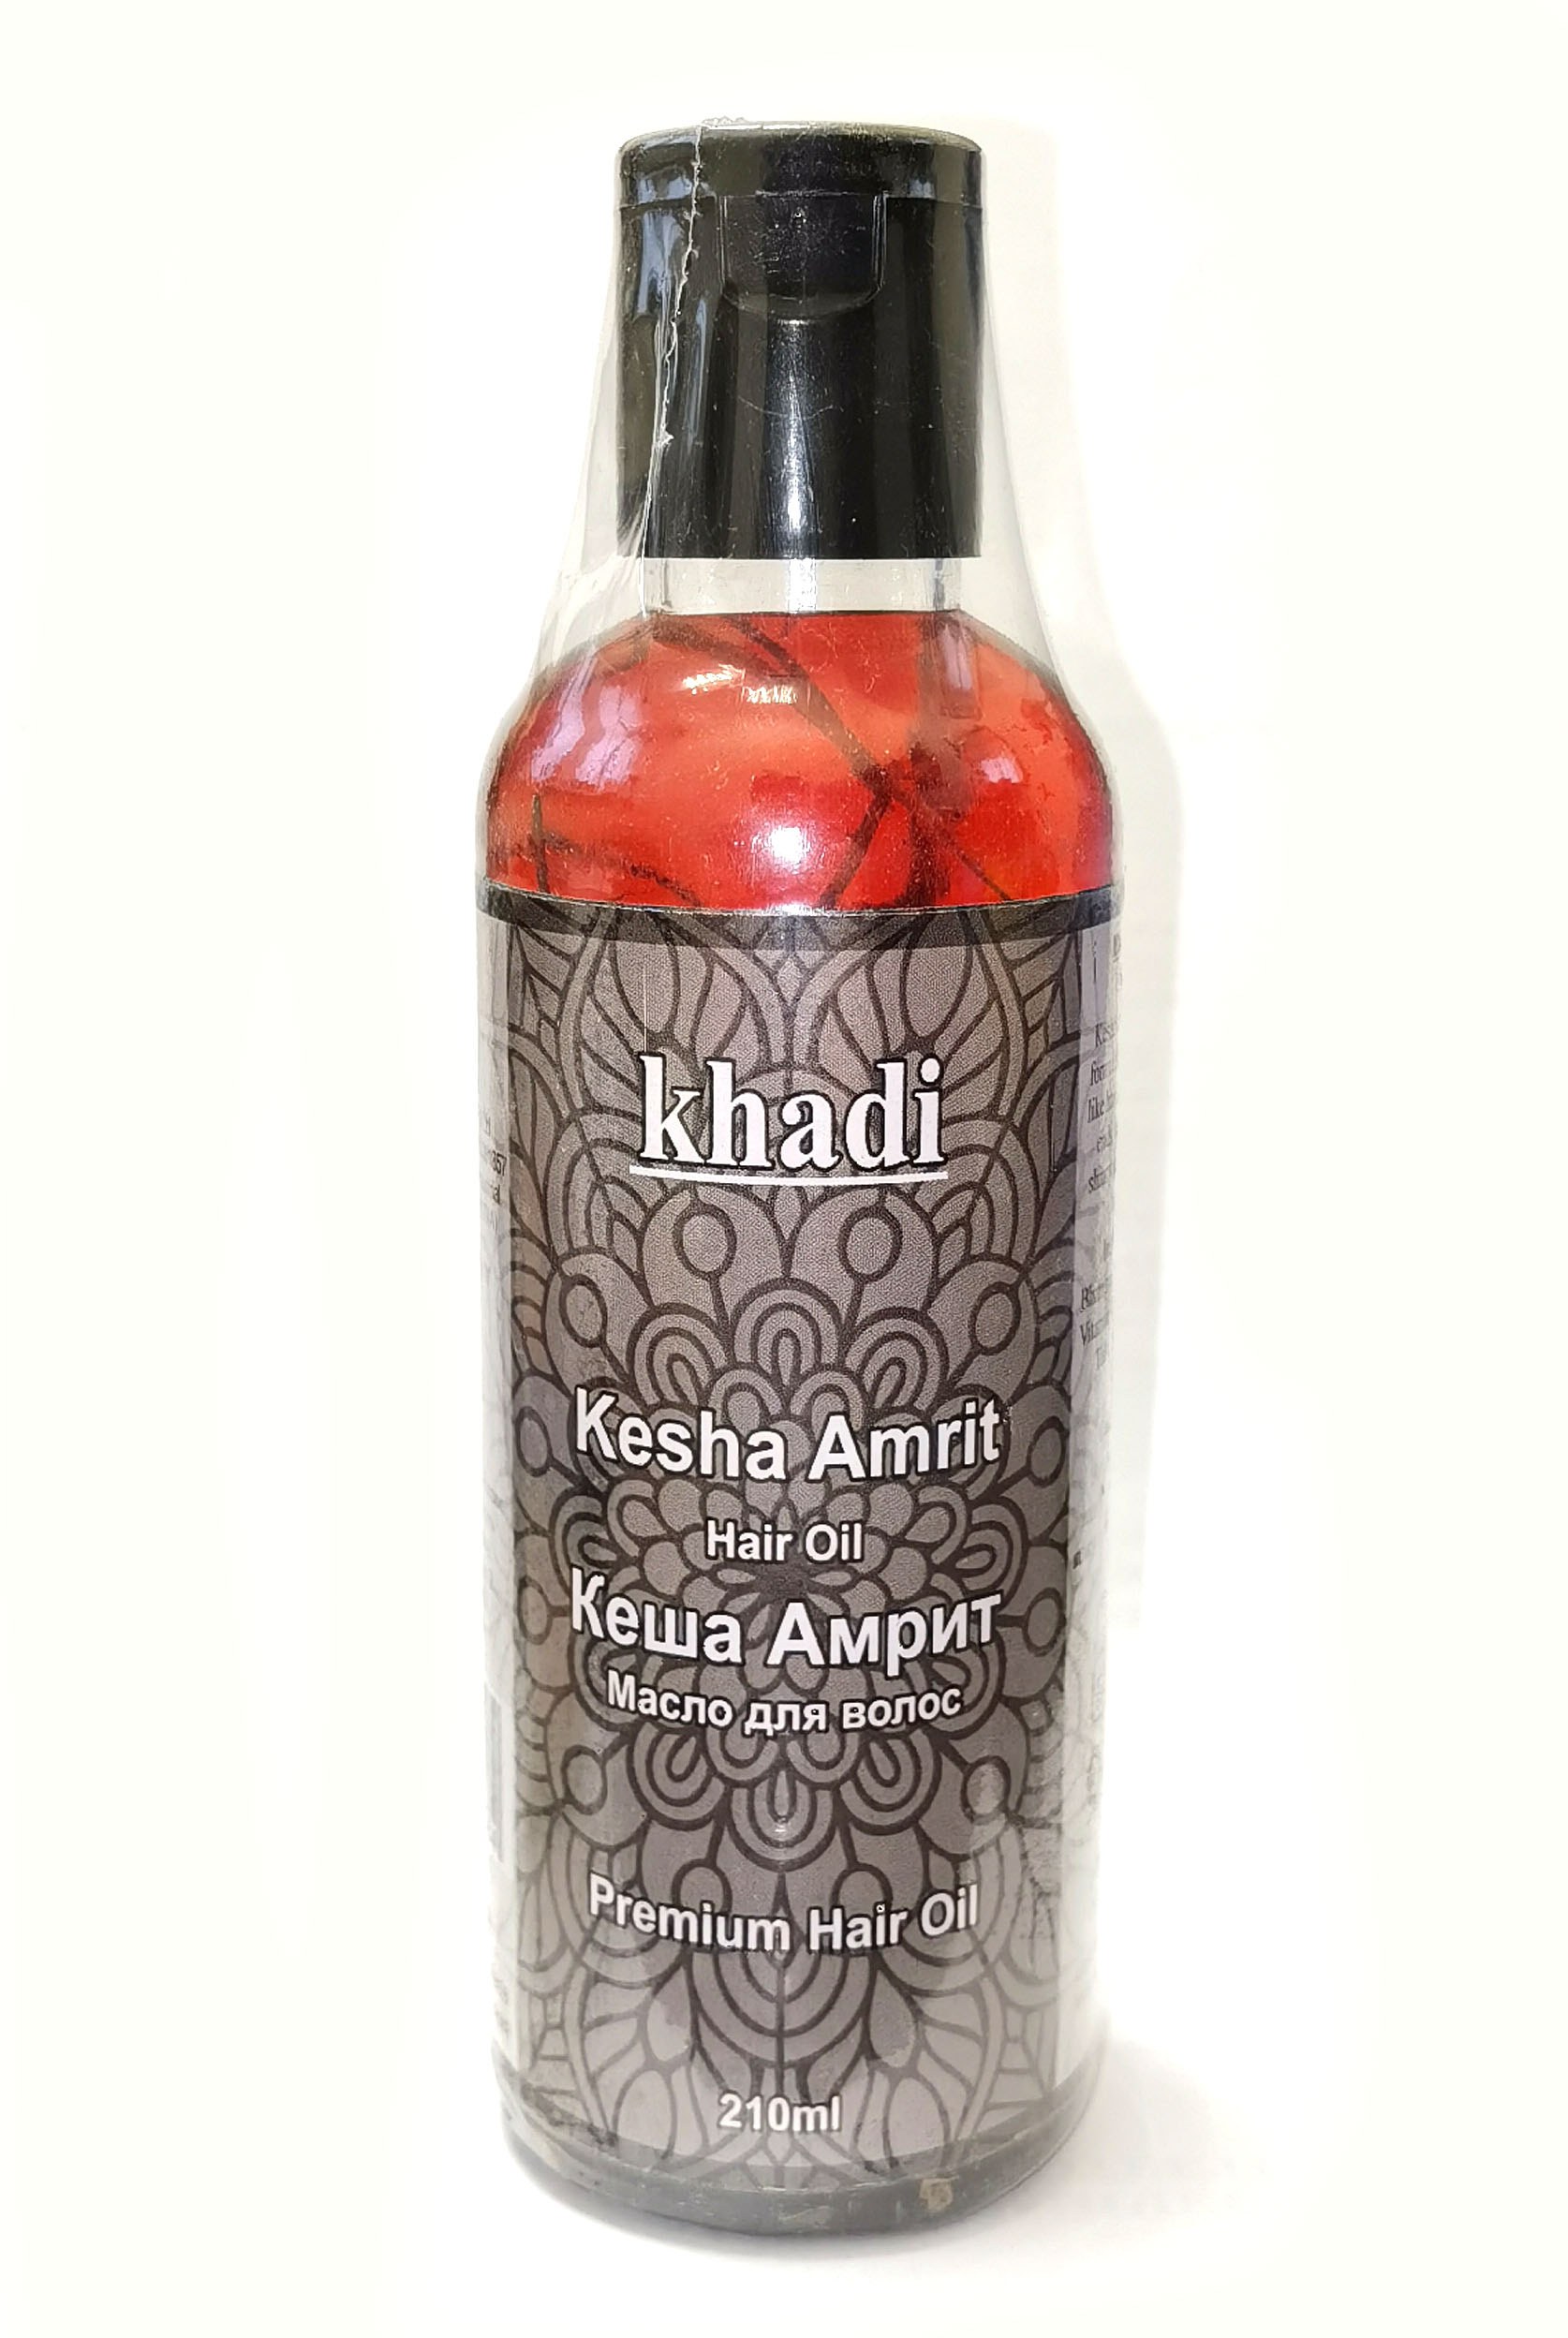 KESHA AMRIT Hair Oil, Khadi India (КЕША АМРИТ масло для роста волос, Кхади Индия), 210 мл. - СРОК ГОДНОСТИ ПО АВГУСТ 2023 ГОДА